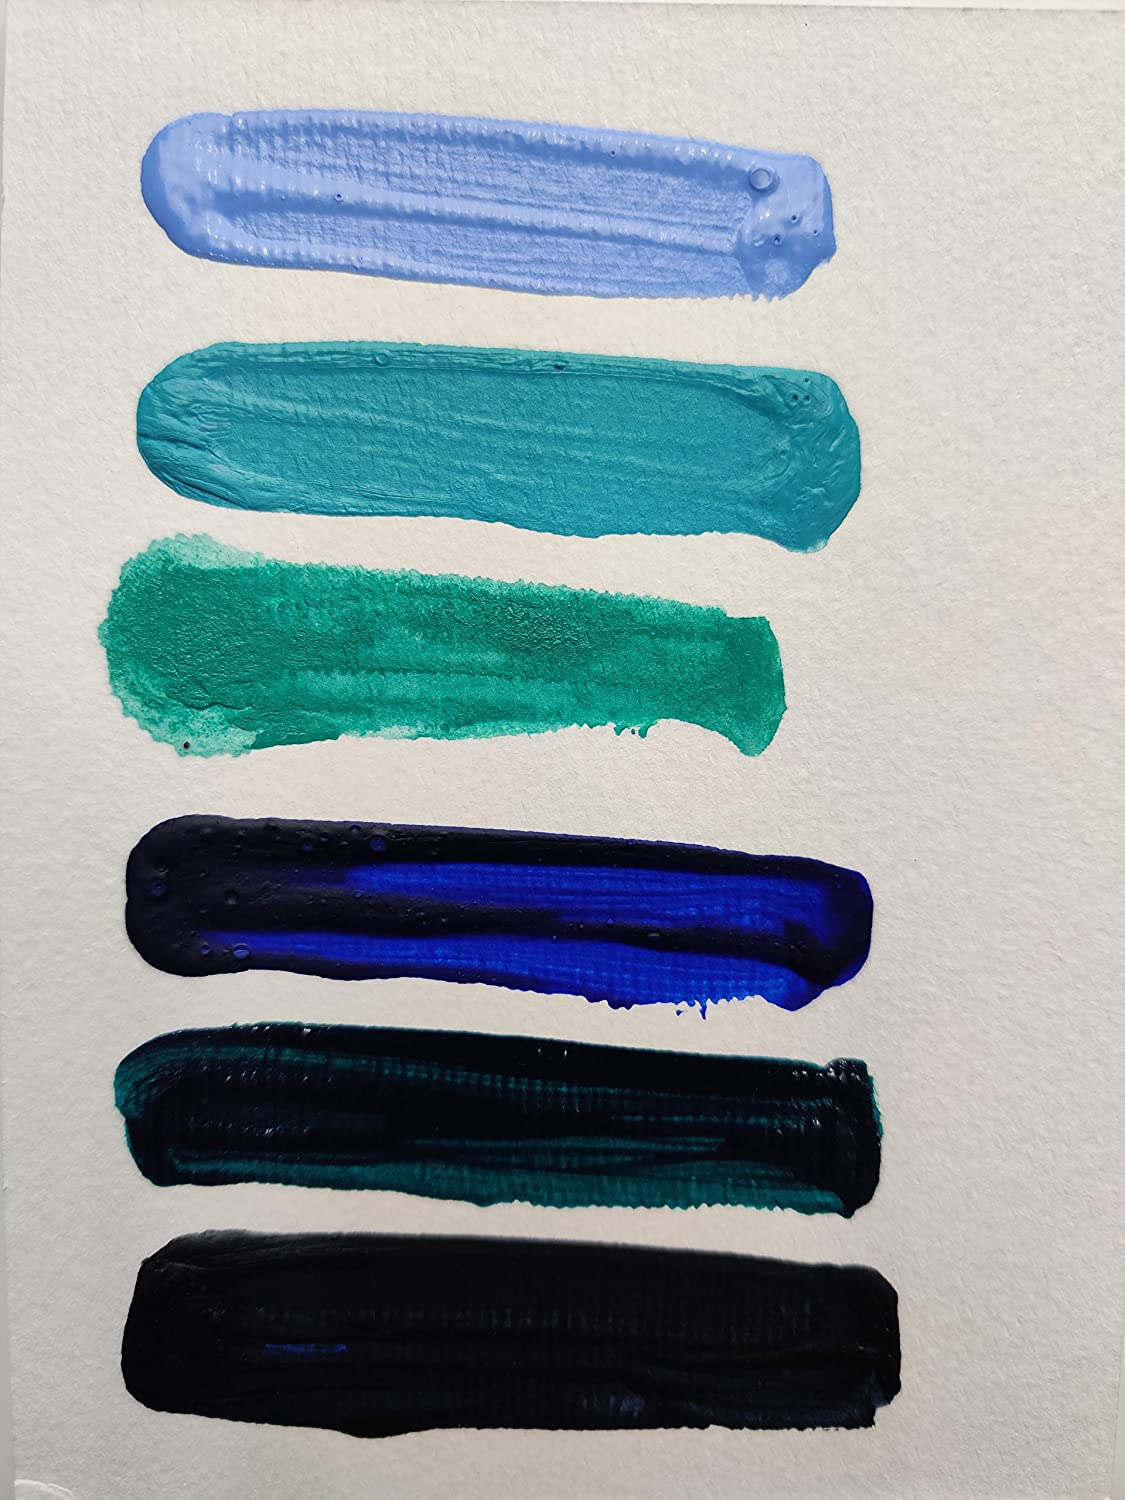 Brustro Professional Artists Fluid Acrylic 20 ml Beyond The Blues Set of 6 (Turquoise, Ultramarine Blue, Zirconian Blue Hue, Paynes Grey, Aqua Green Light, Azure Blue) with Pouring Medium 200 ml